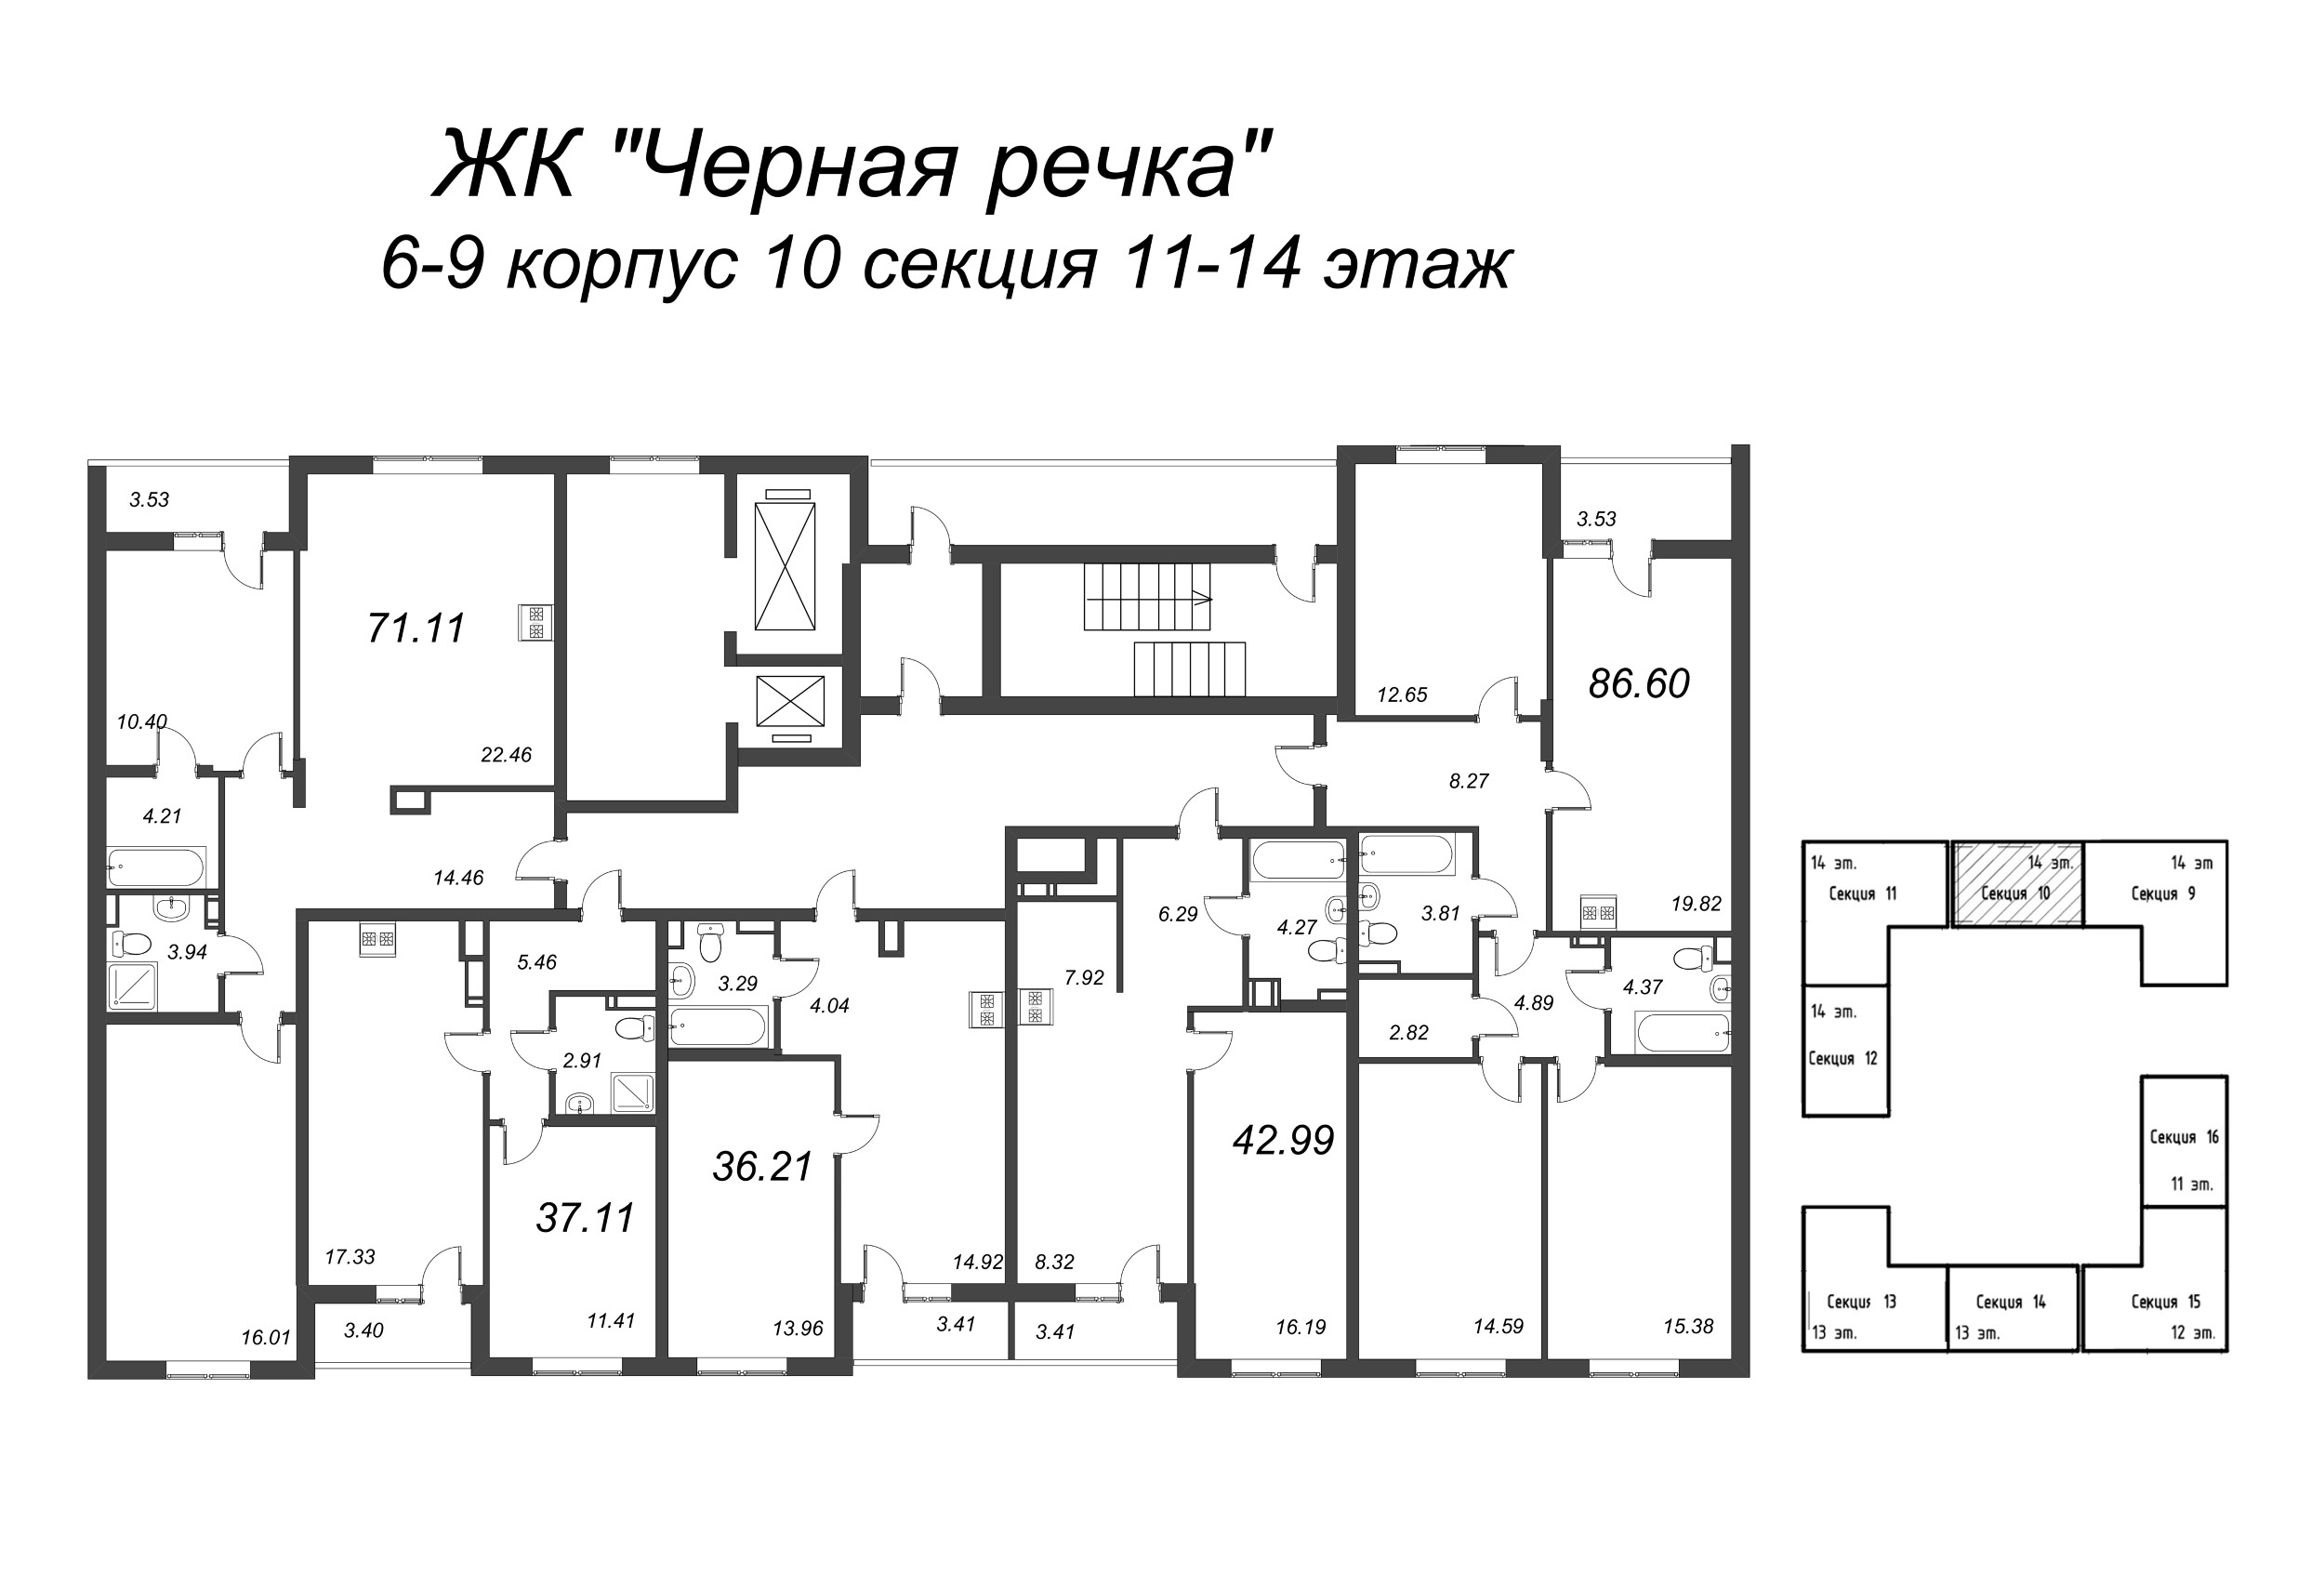 3-комнатная (Евро) квартира, 71.11 м² - планировка этажа